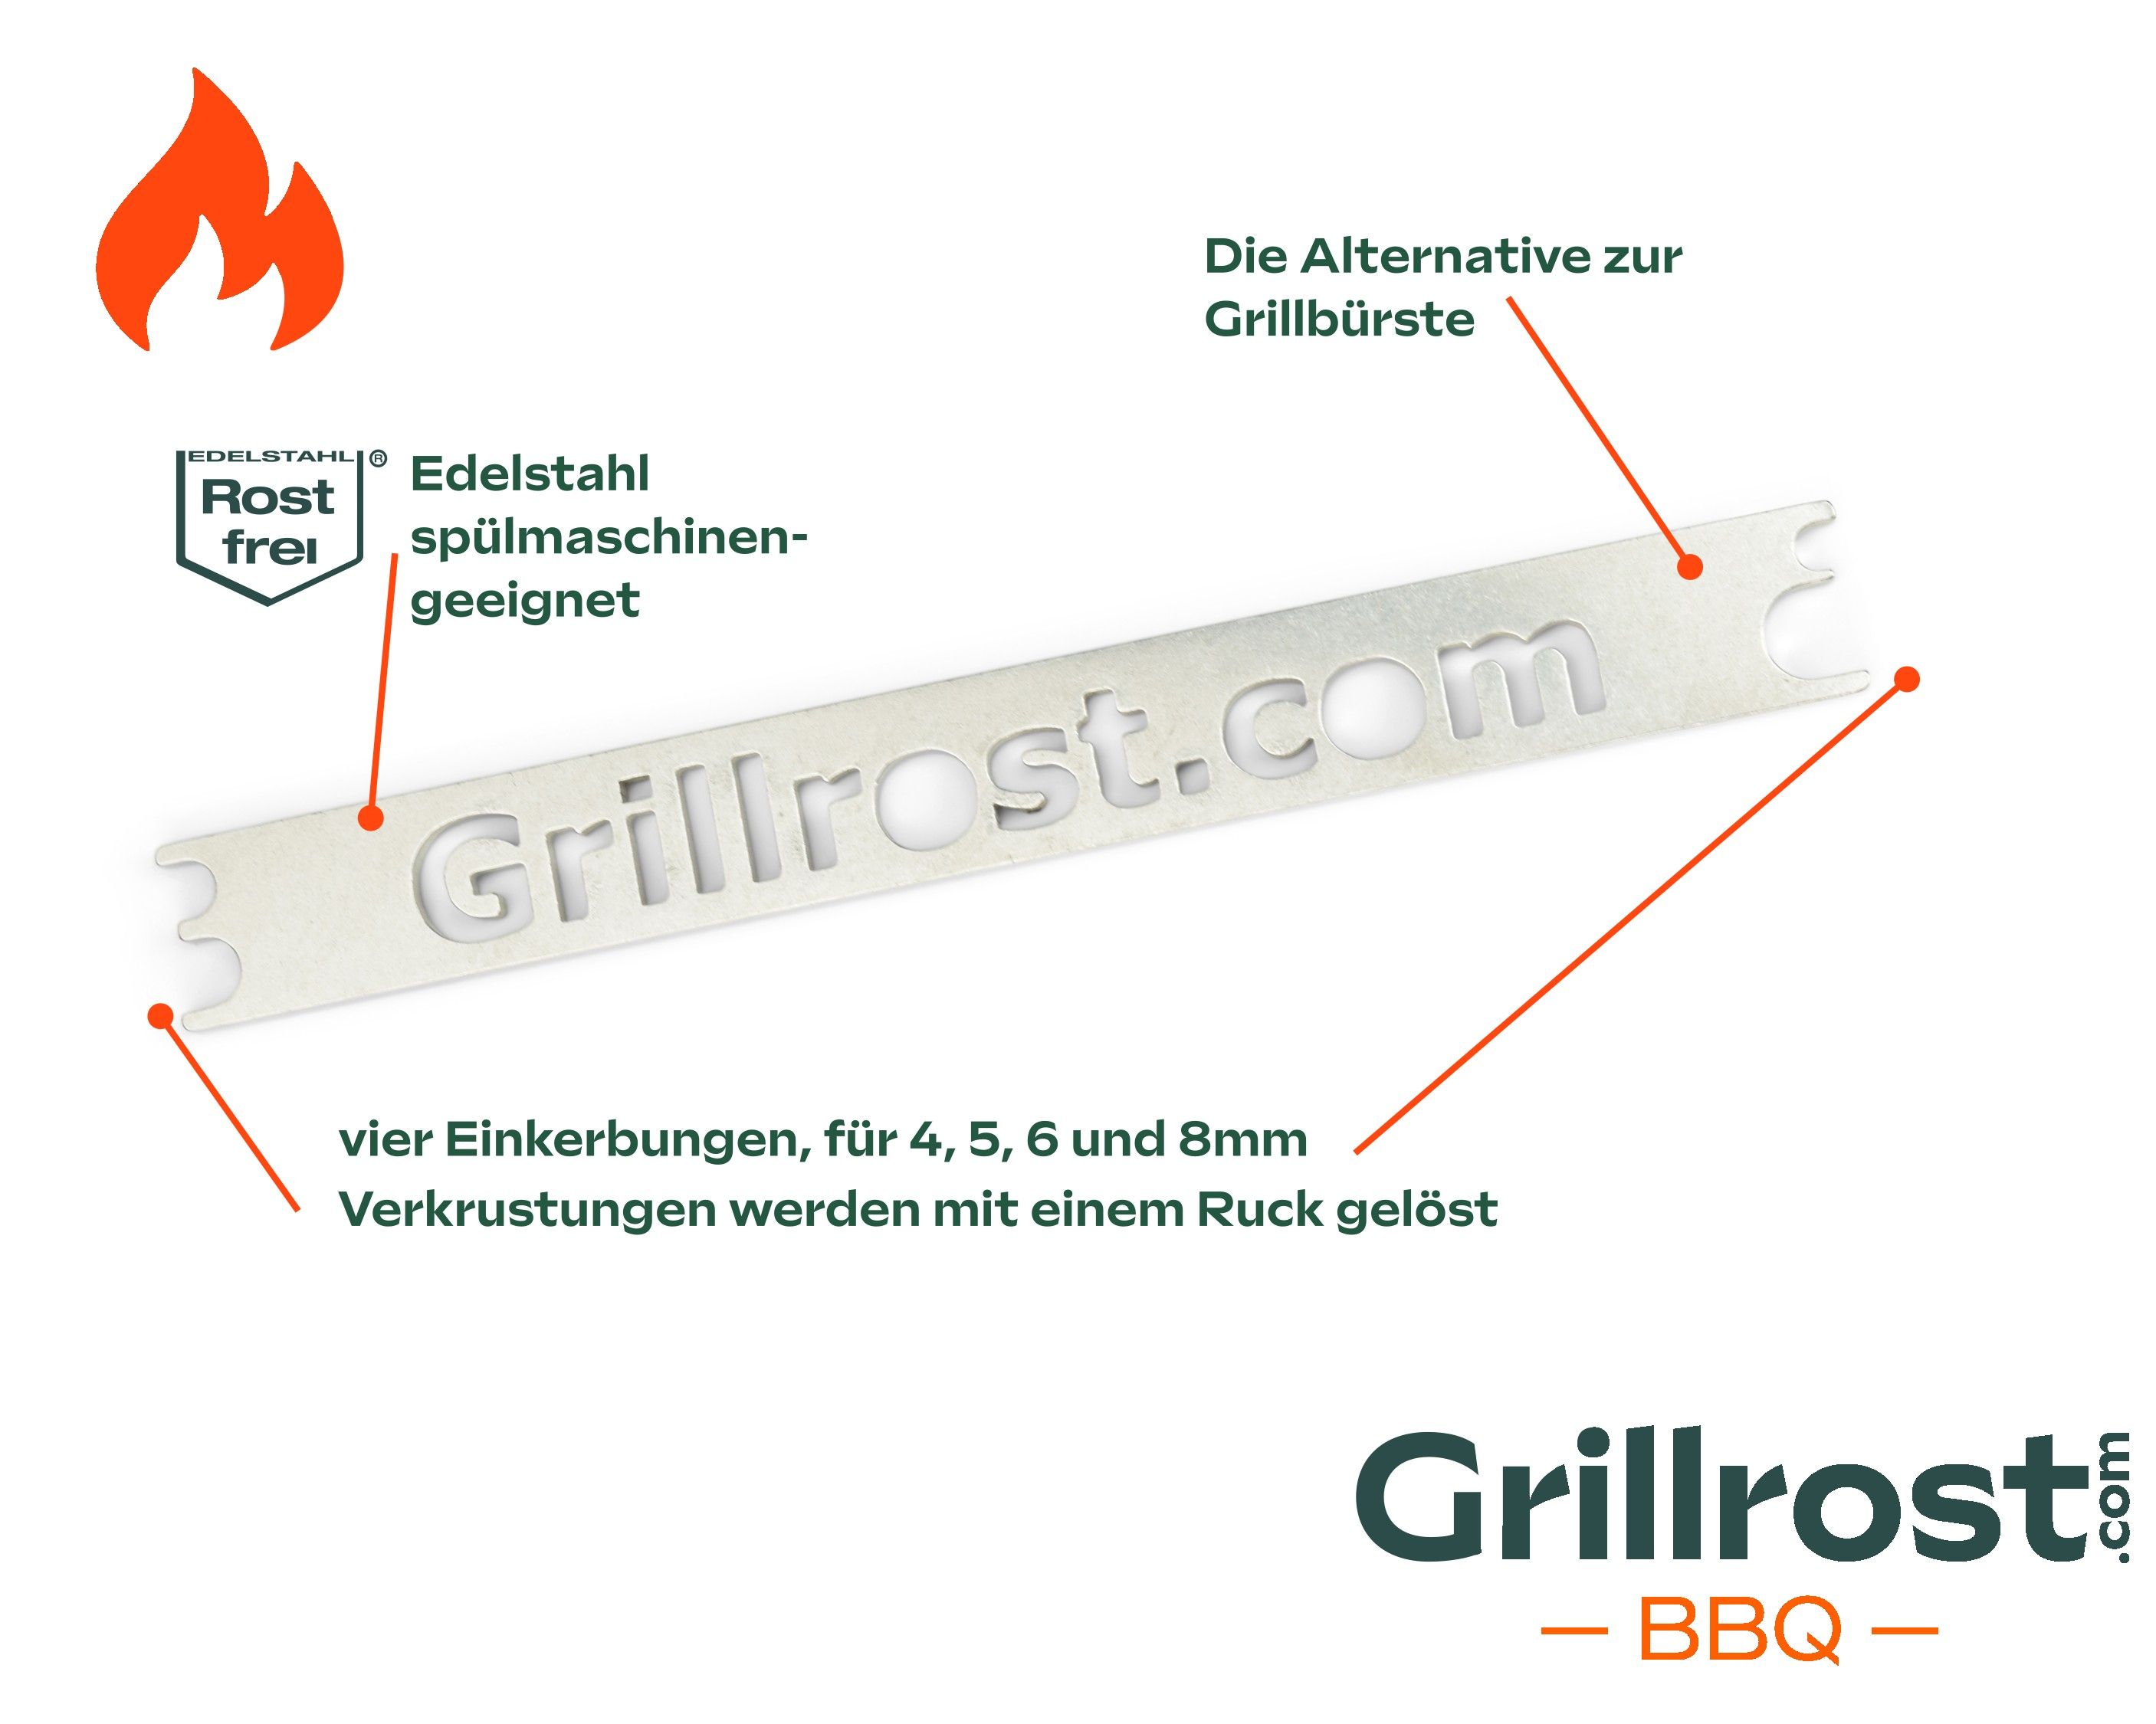 The Grillrost.com grill scraper The ingenious alternative to the barbecue brush